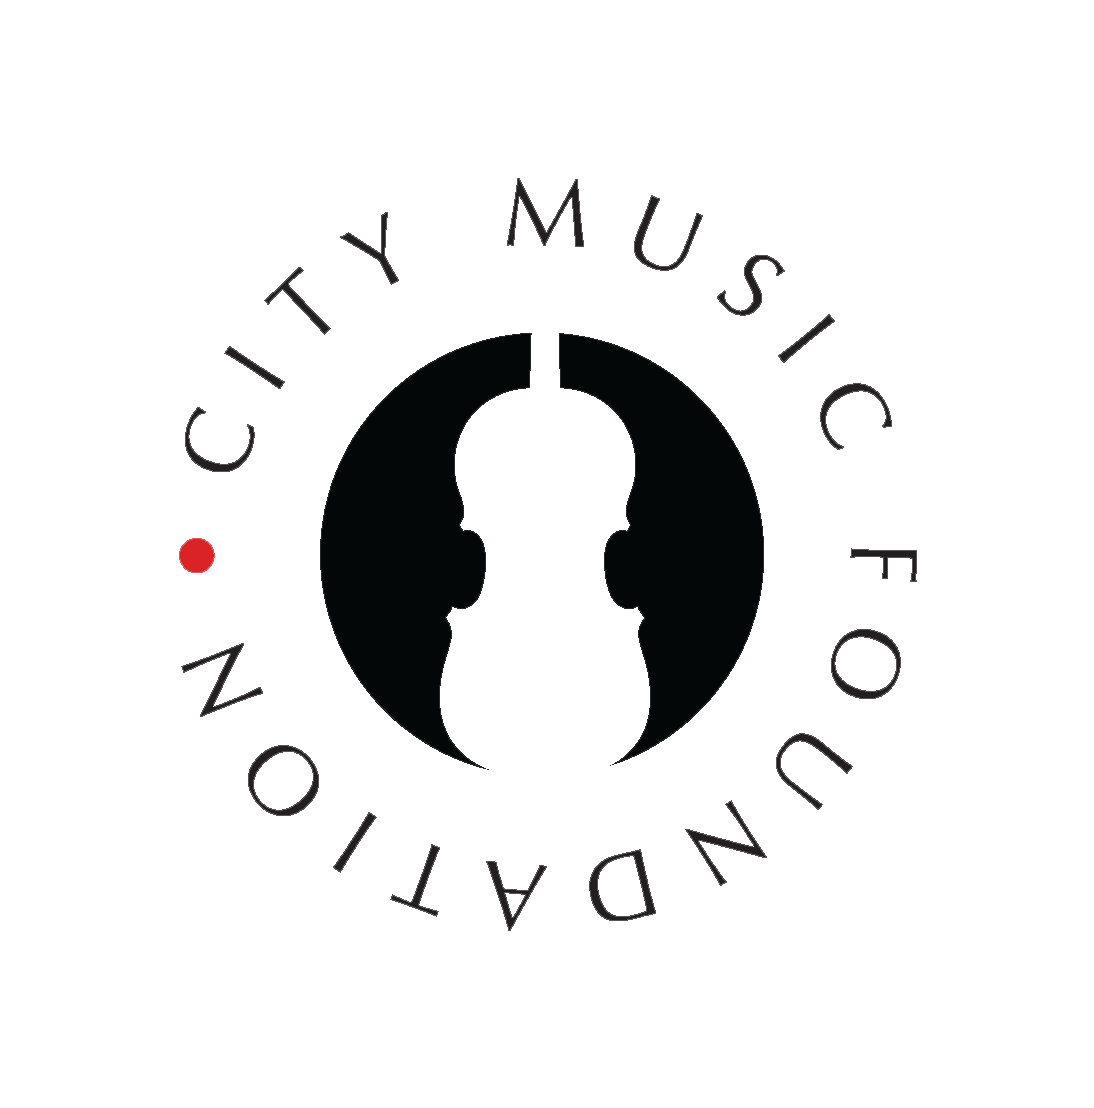 City Music Foundation logo